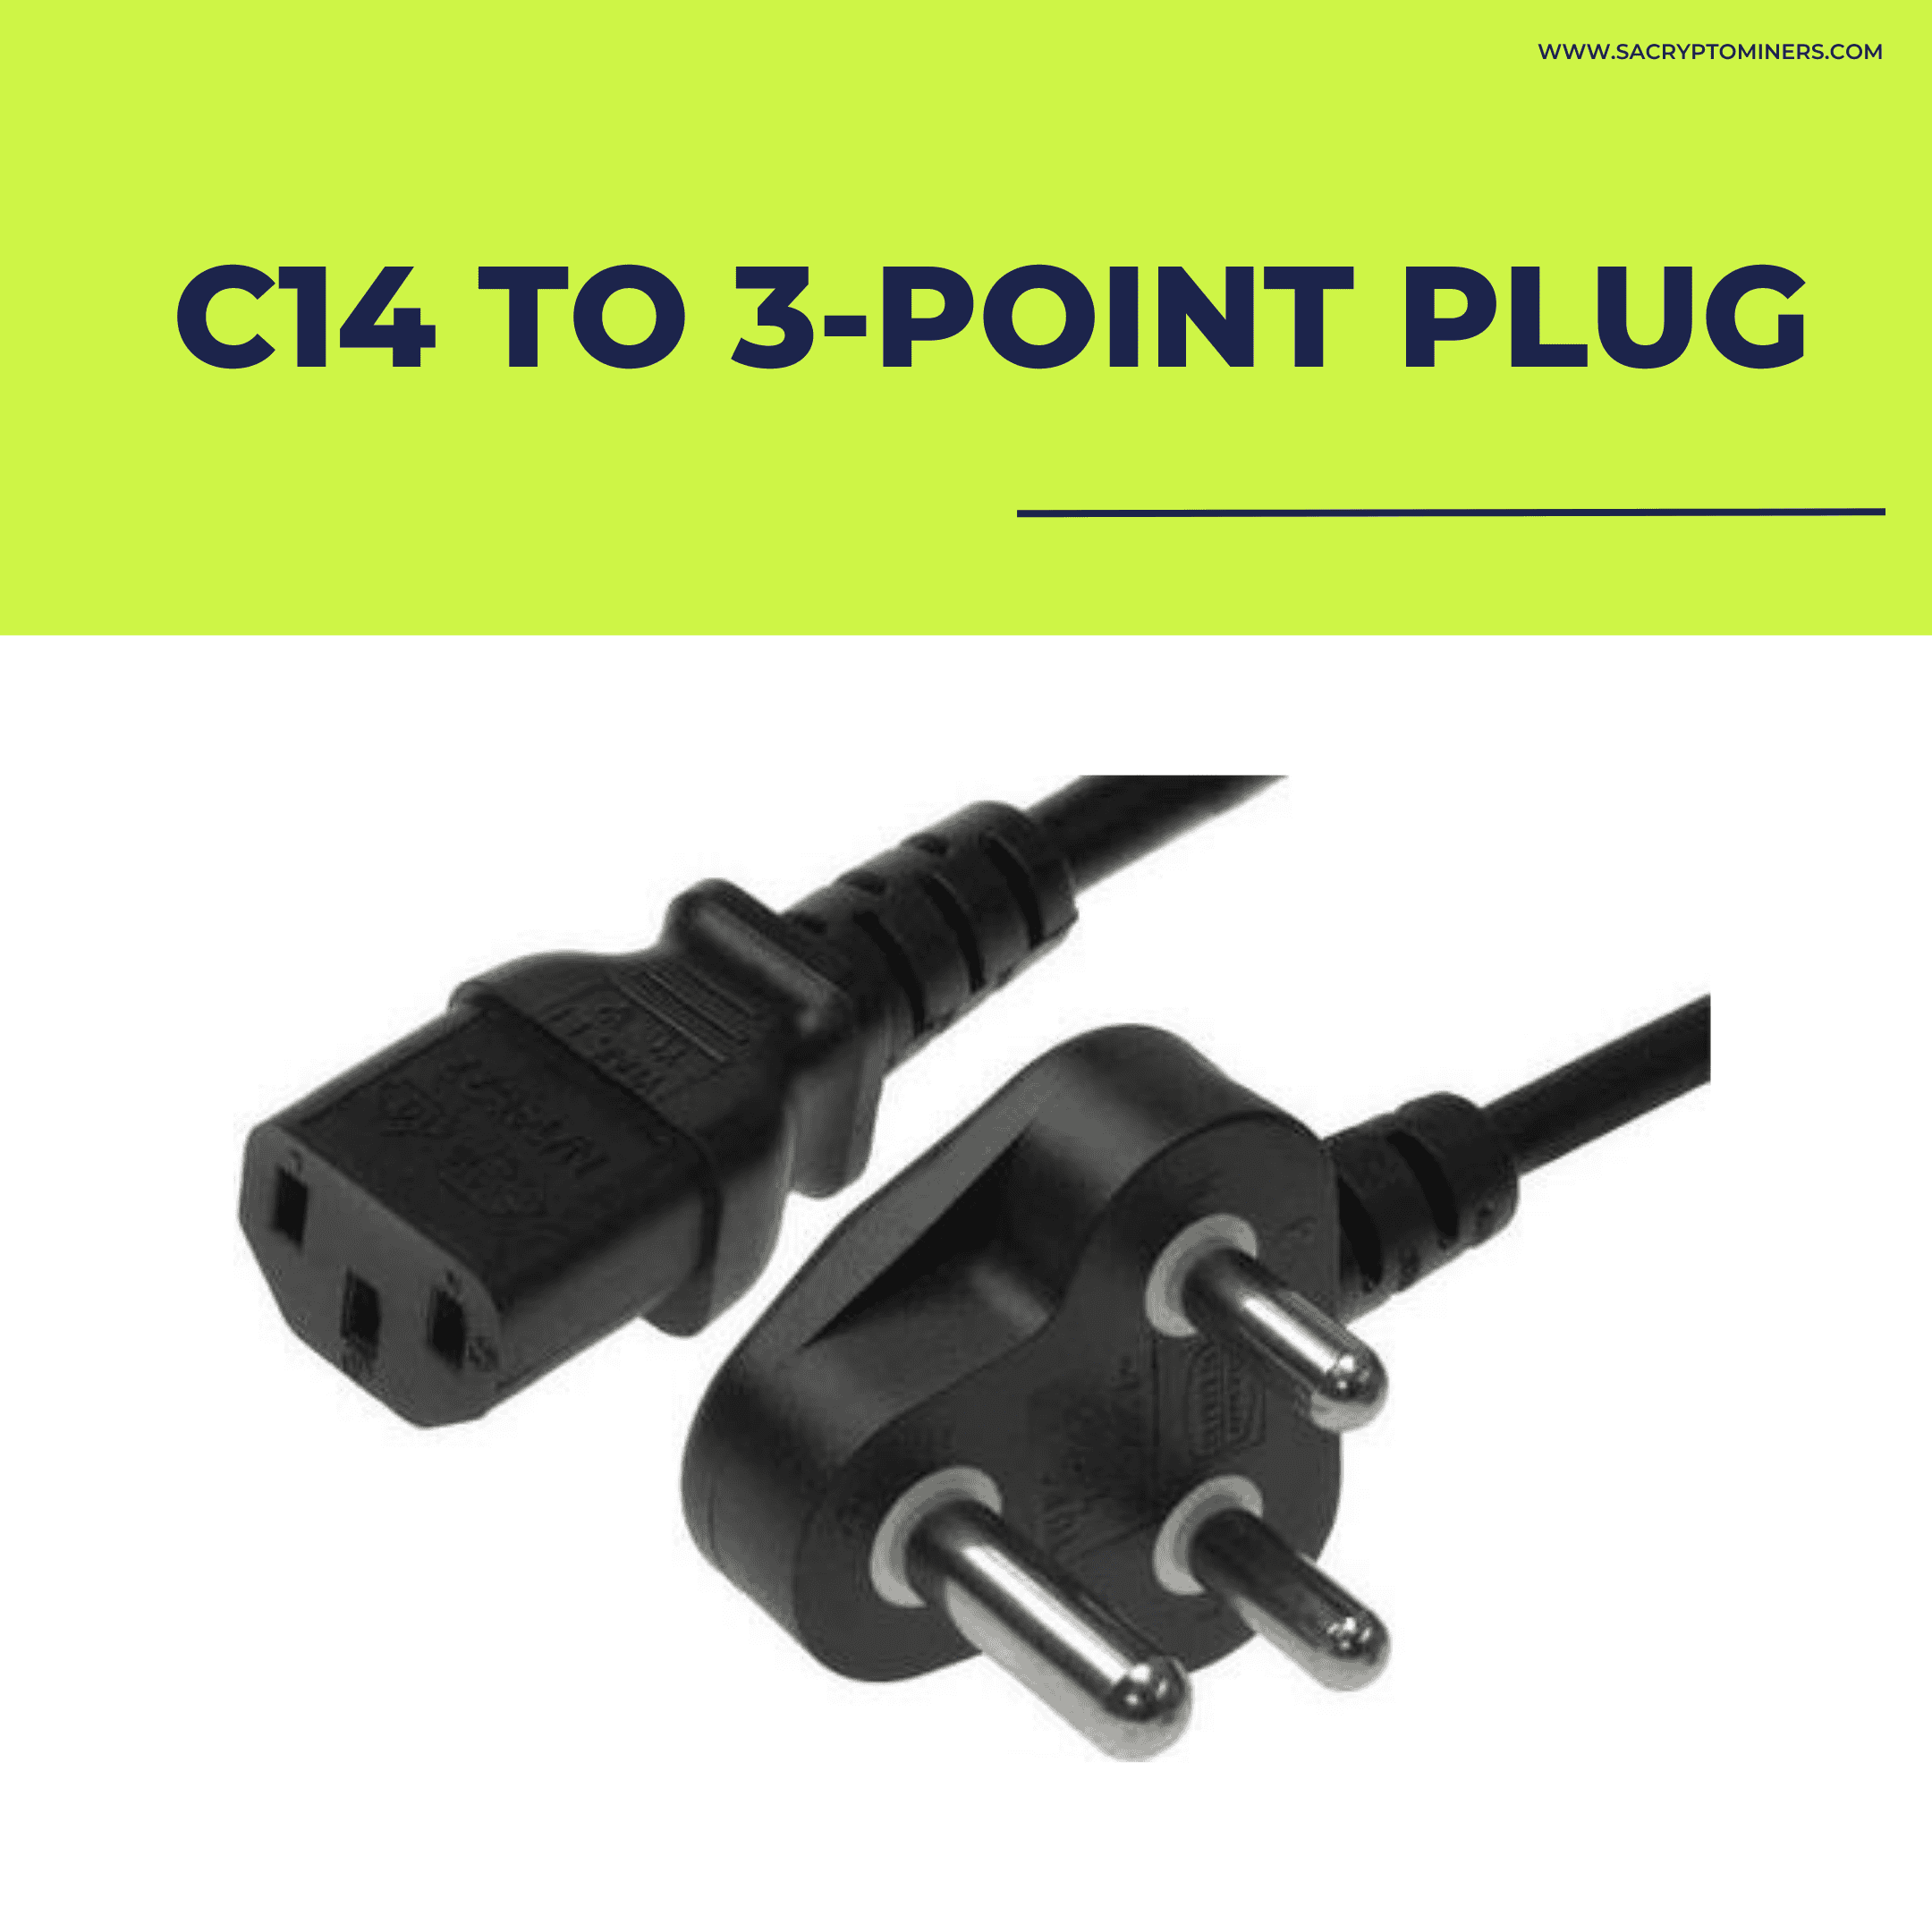 C14 Kettle cord power cable 1.2m with 3-prong SA plug